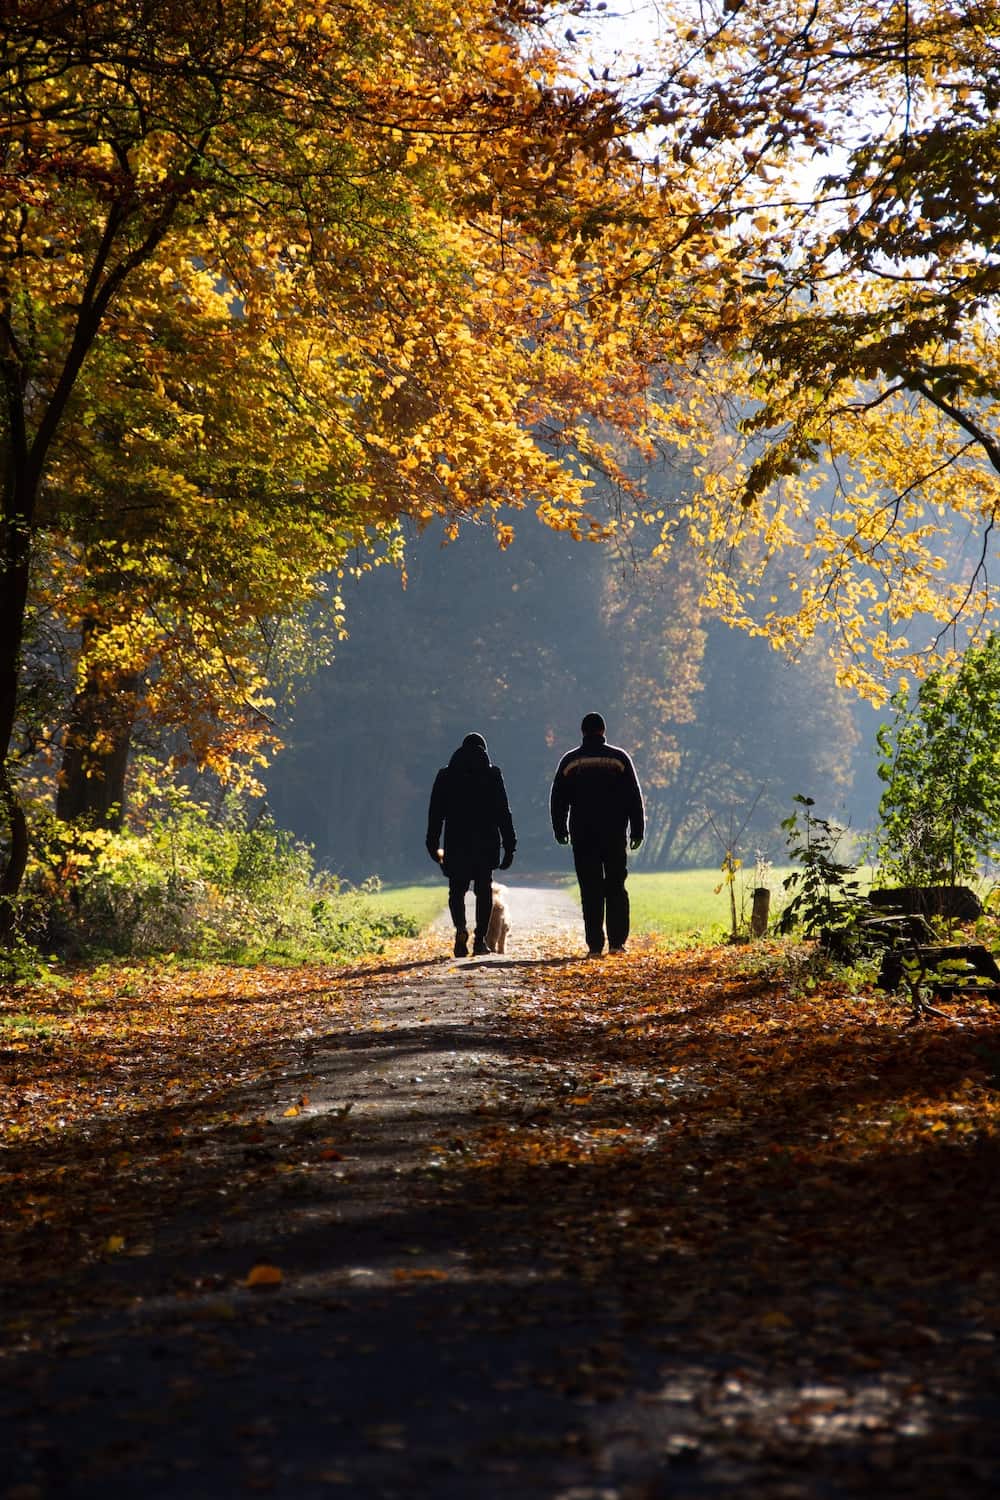 Two people walking dog along path